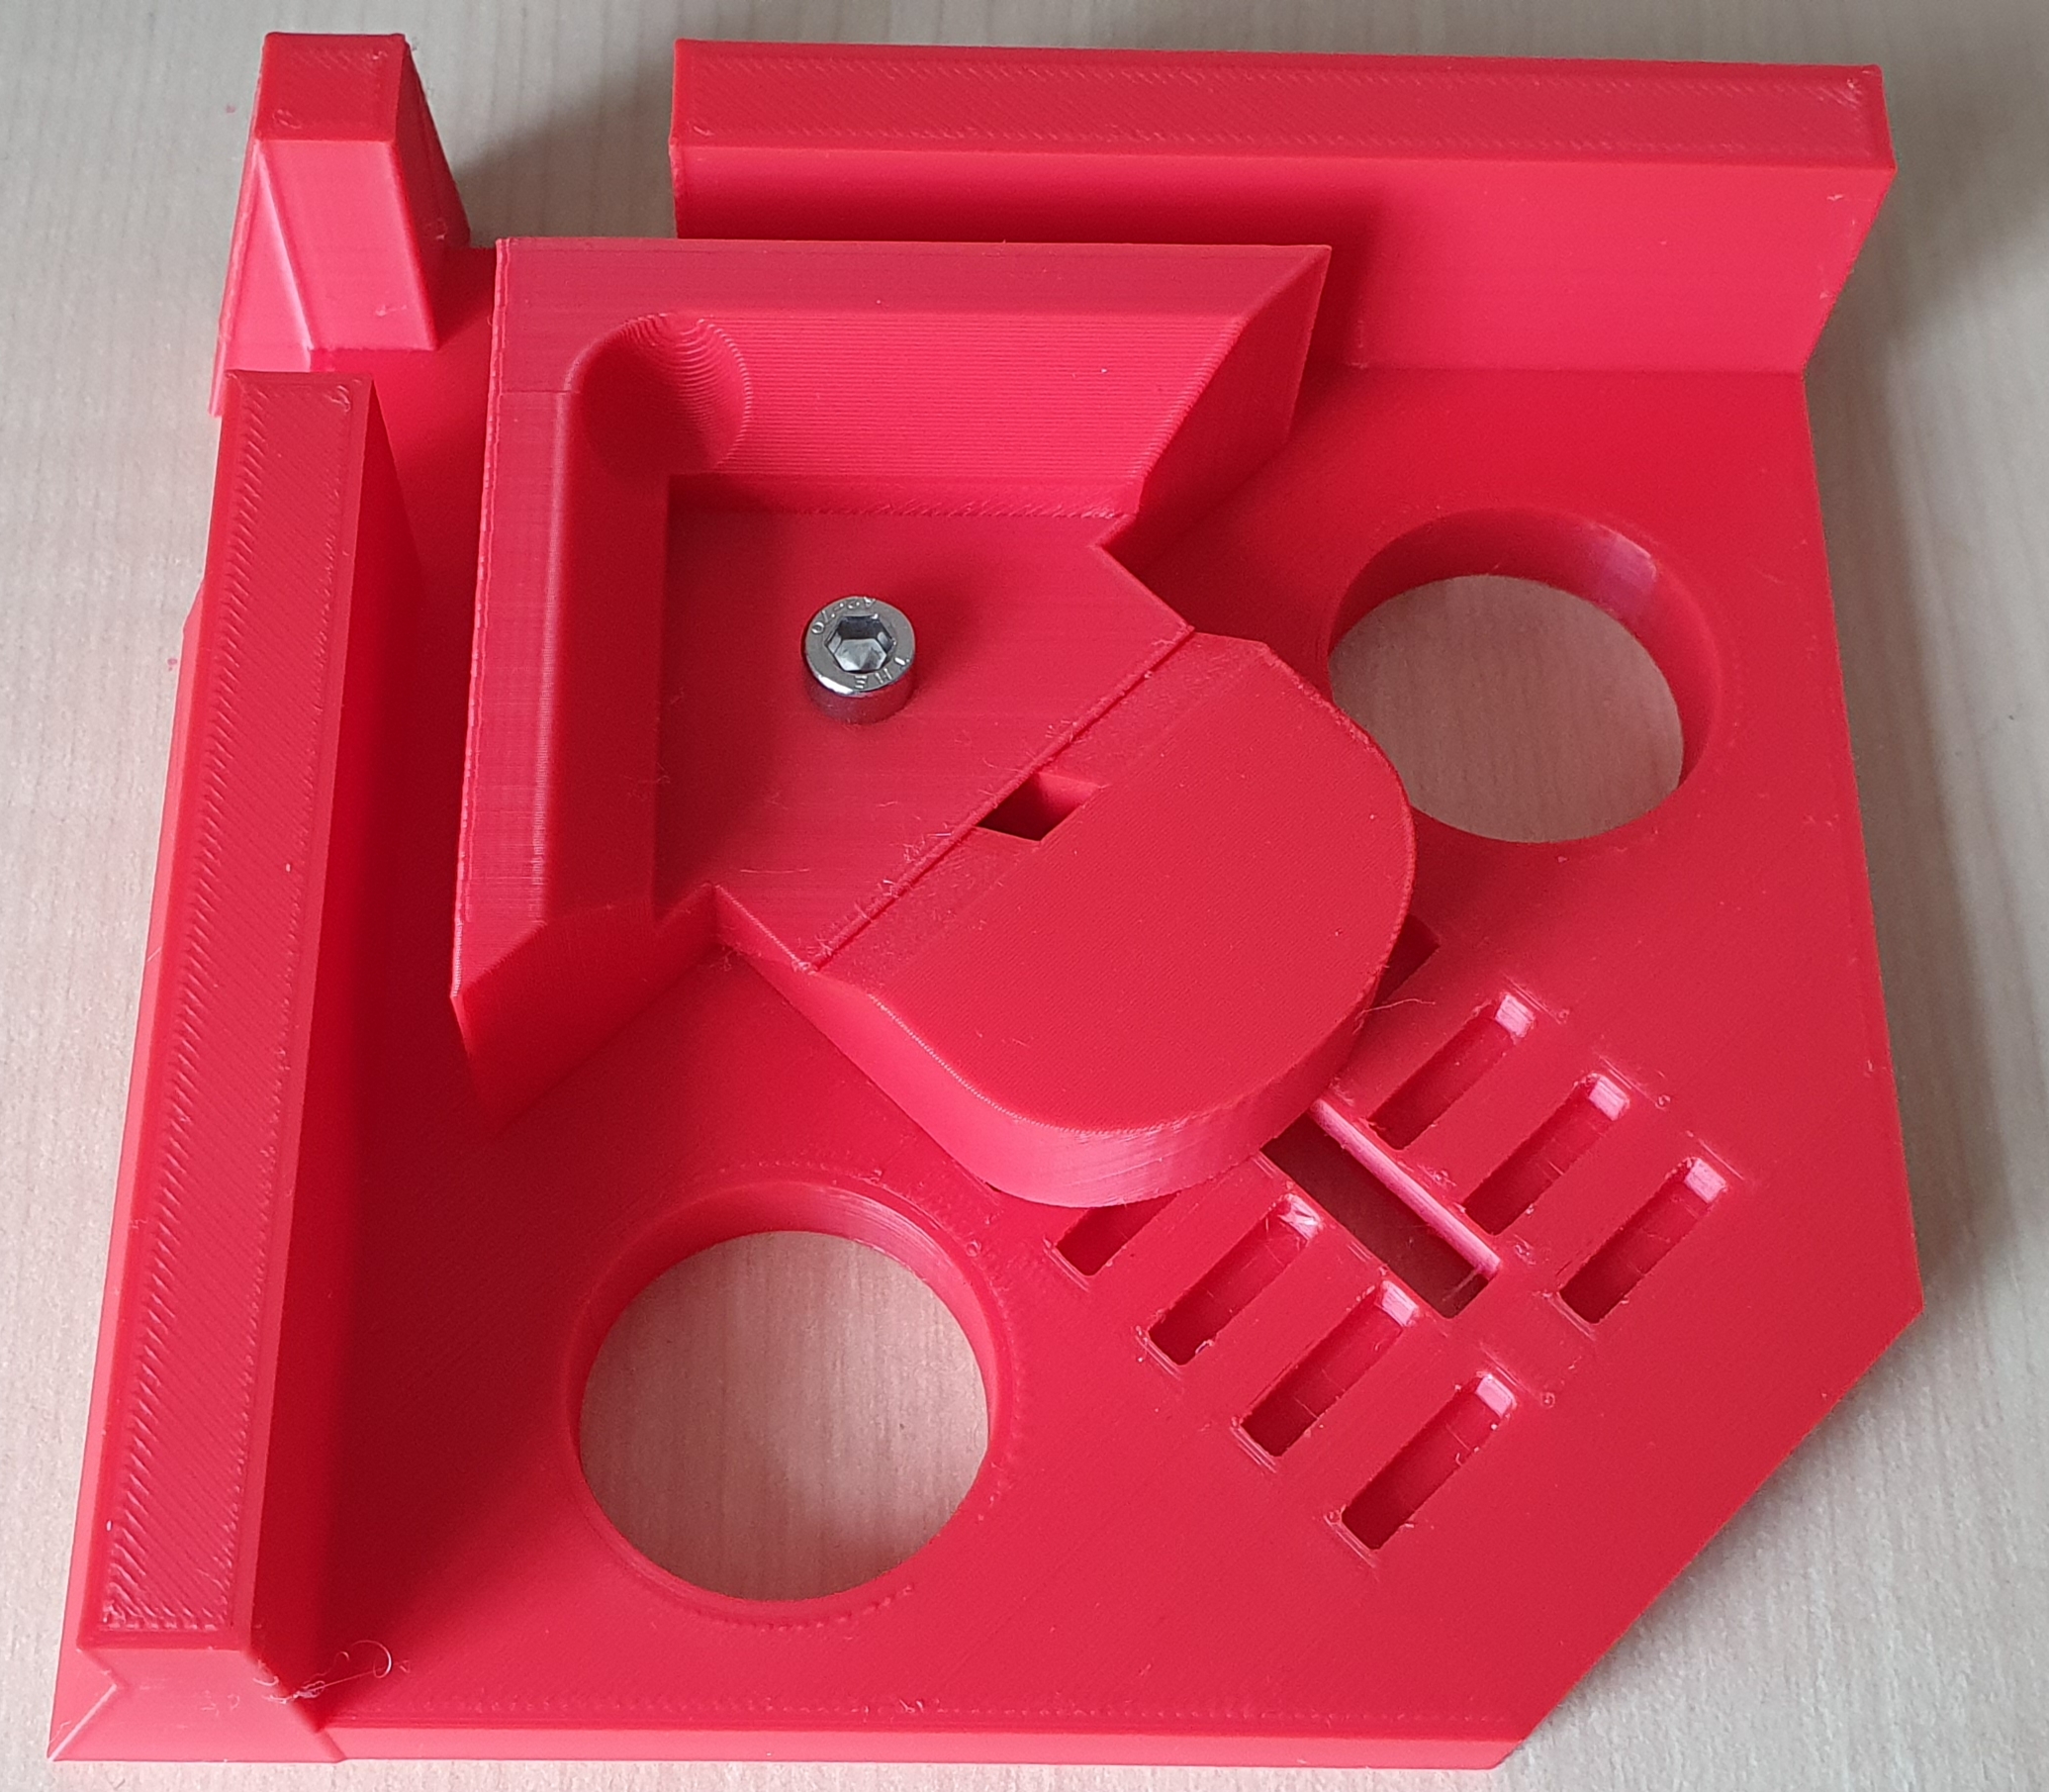 3D Printable variable corner clamp by Martin Gerken